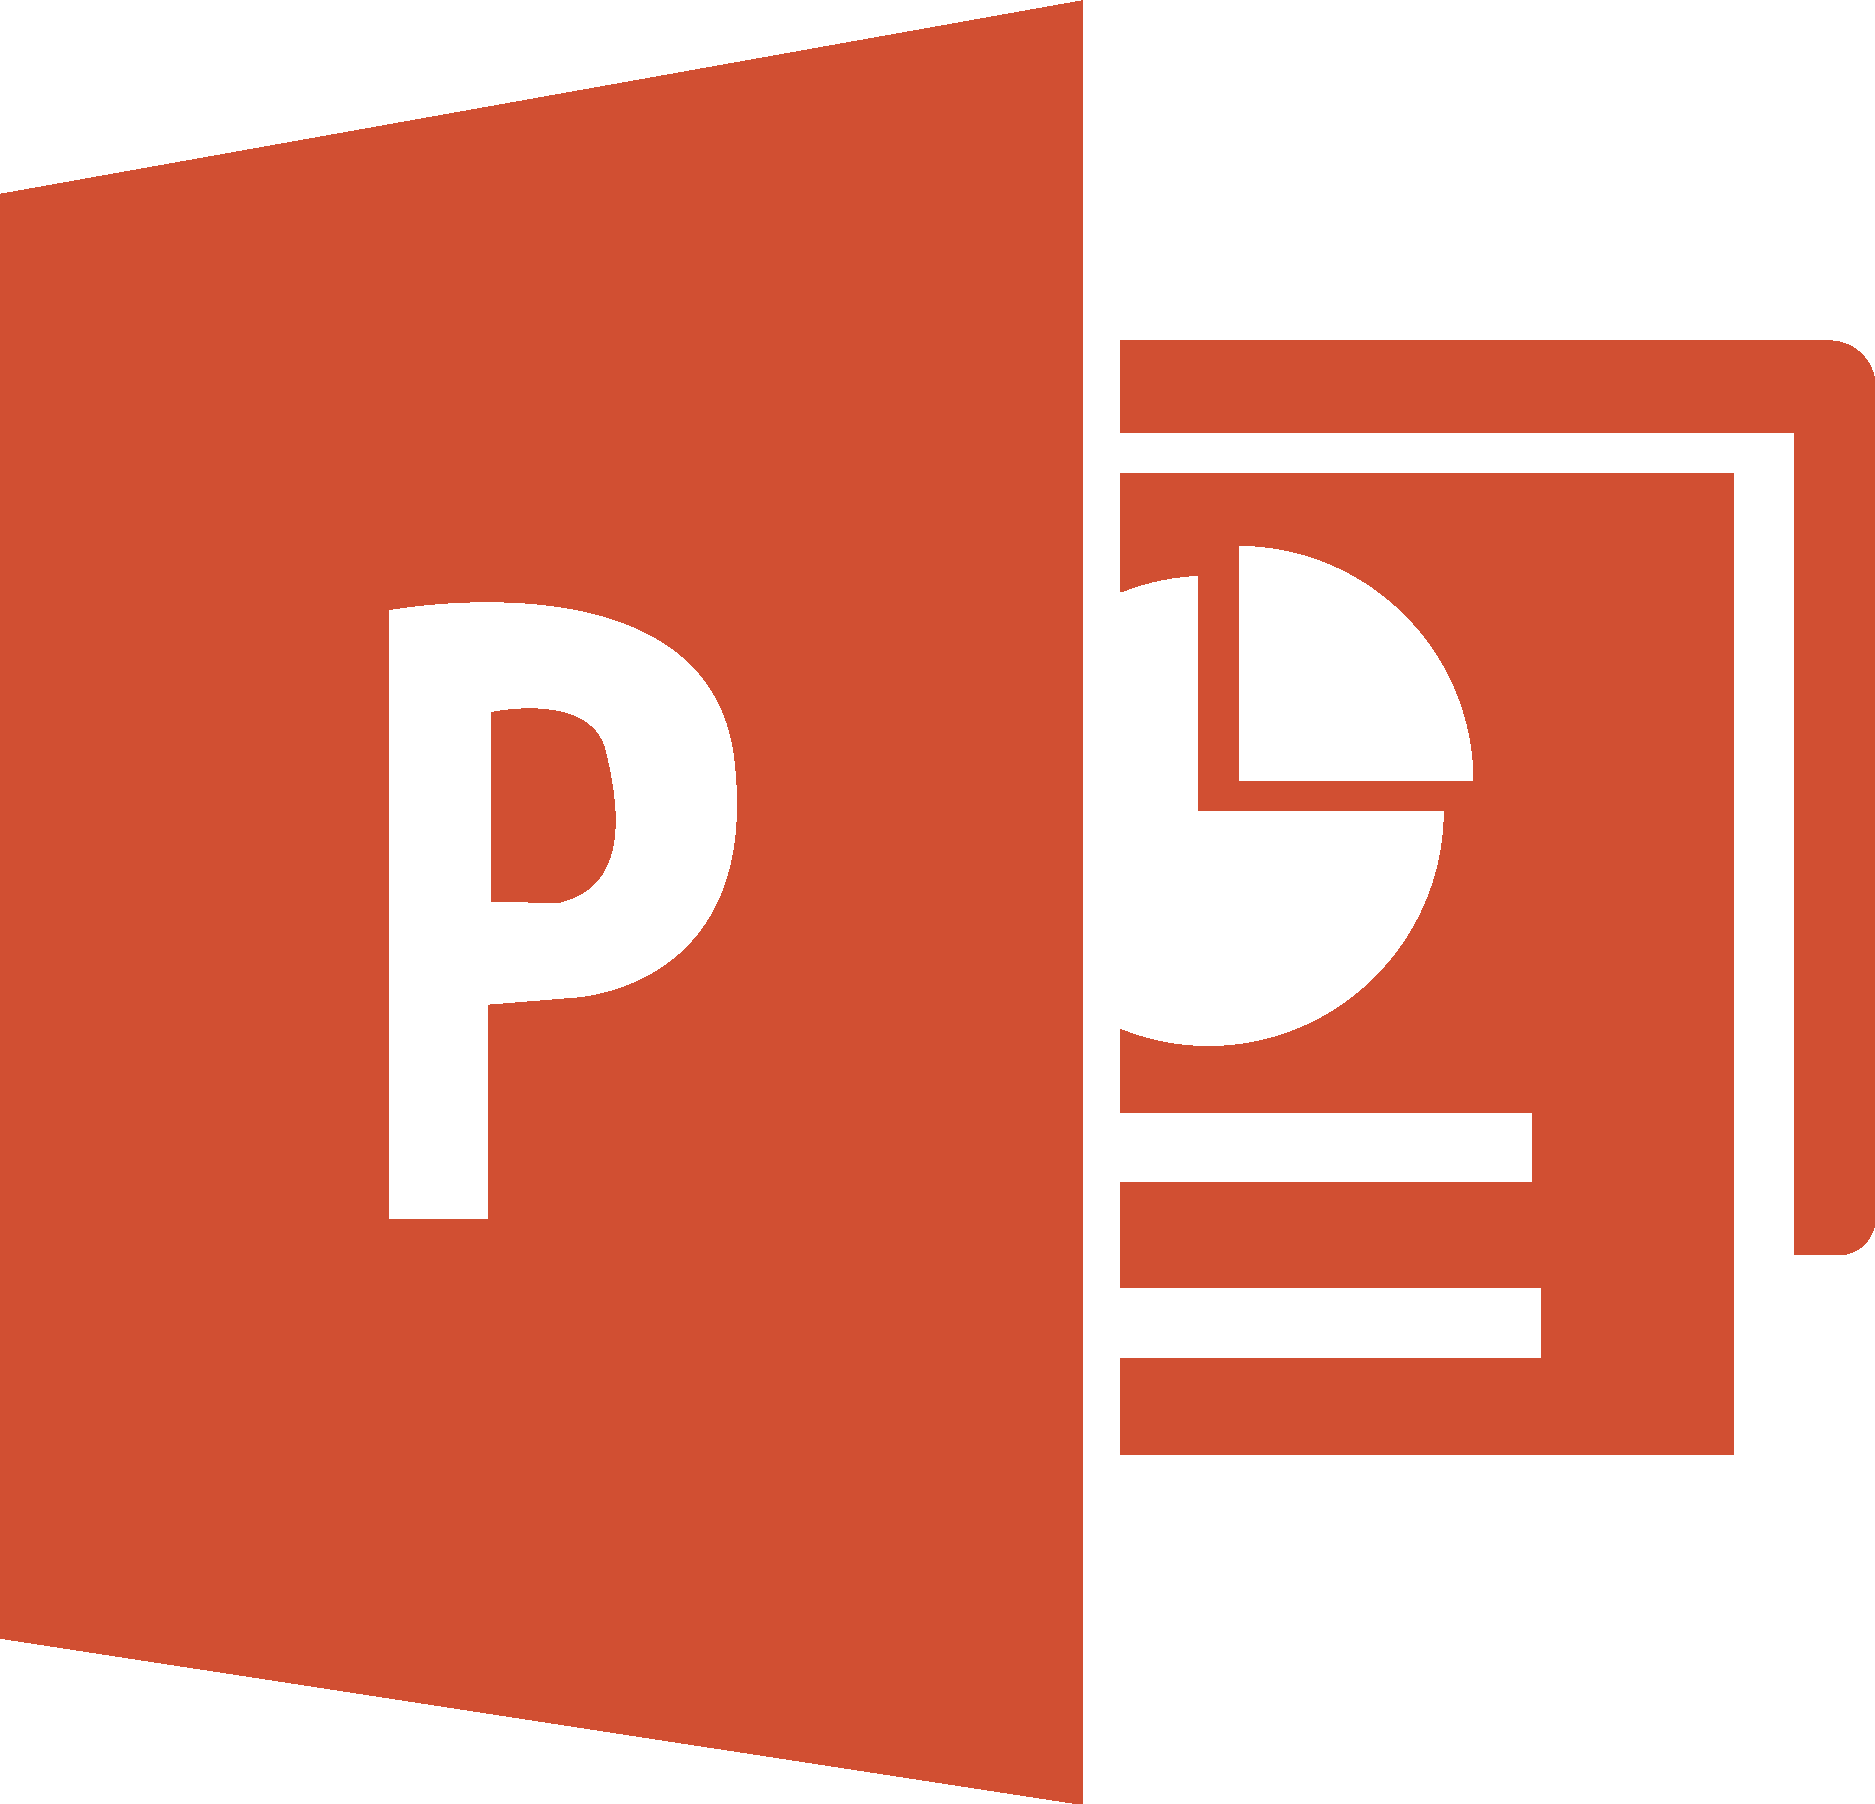 Microsoft POWERPOINT 2007 логотип. Значок Майкрософт повер поинт. Microsoft POWERPOINT ярлык. Поверкоин.